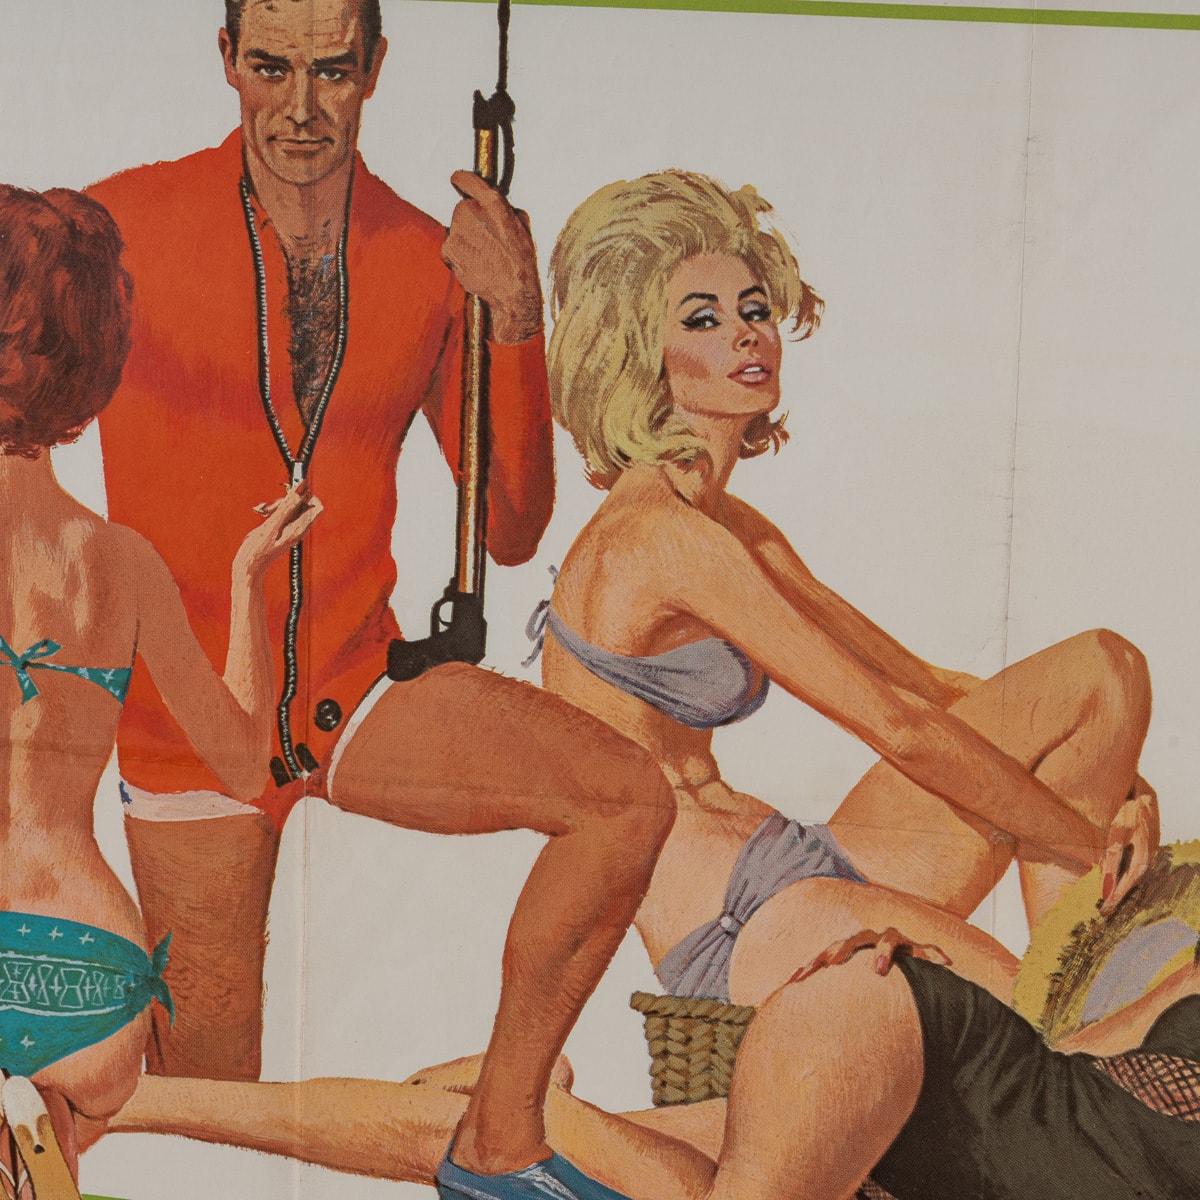 Original U.S James Bond 007 'Thunderball' Poster c.1965 For Sale 9